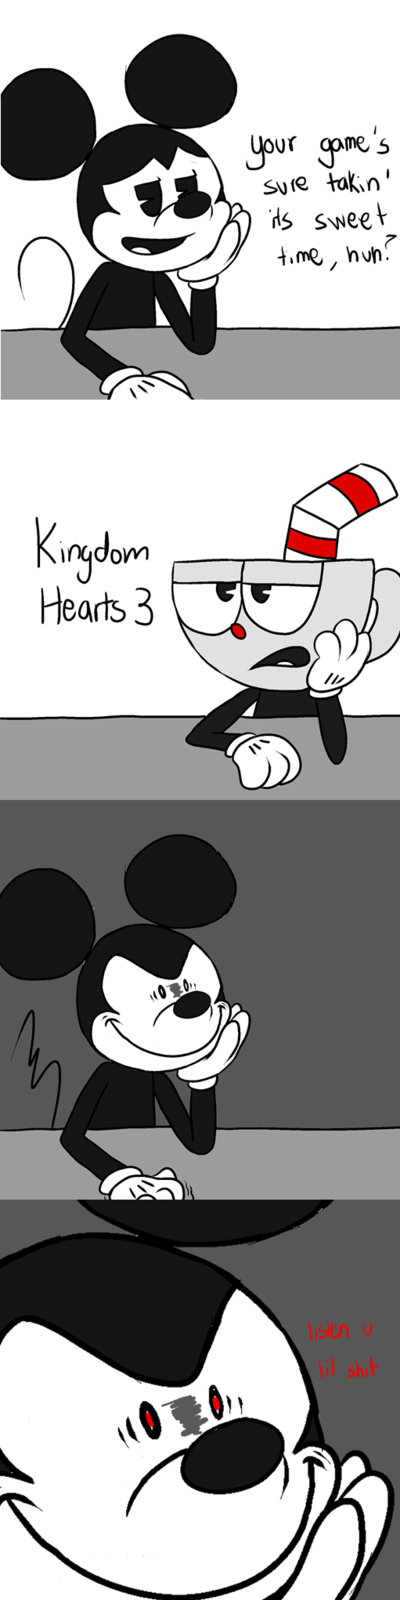 kingdom hearts cuphead - your game's sure takin' its sweet time, hun. Kingdom Hearts 3 listen u lil shit